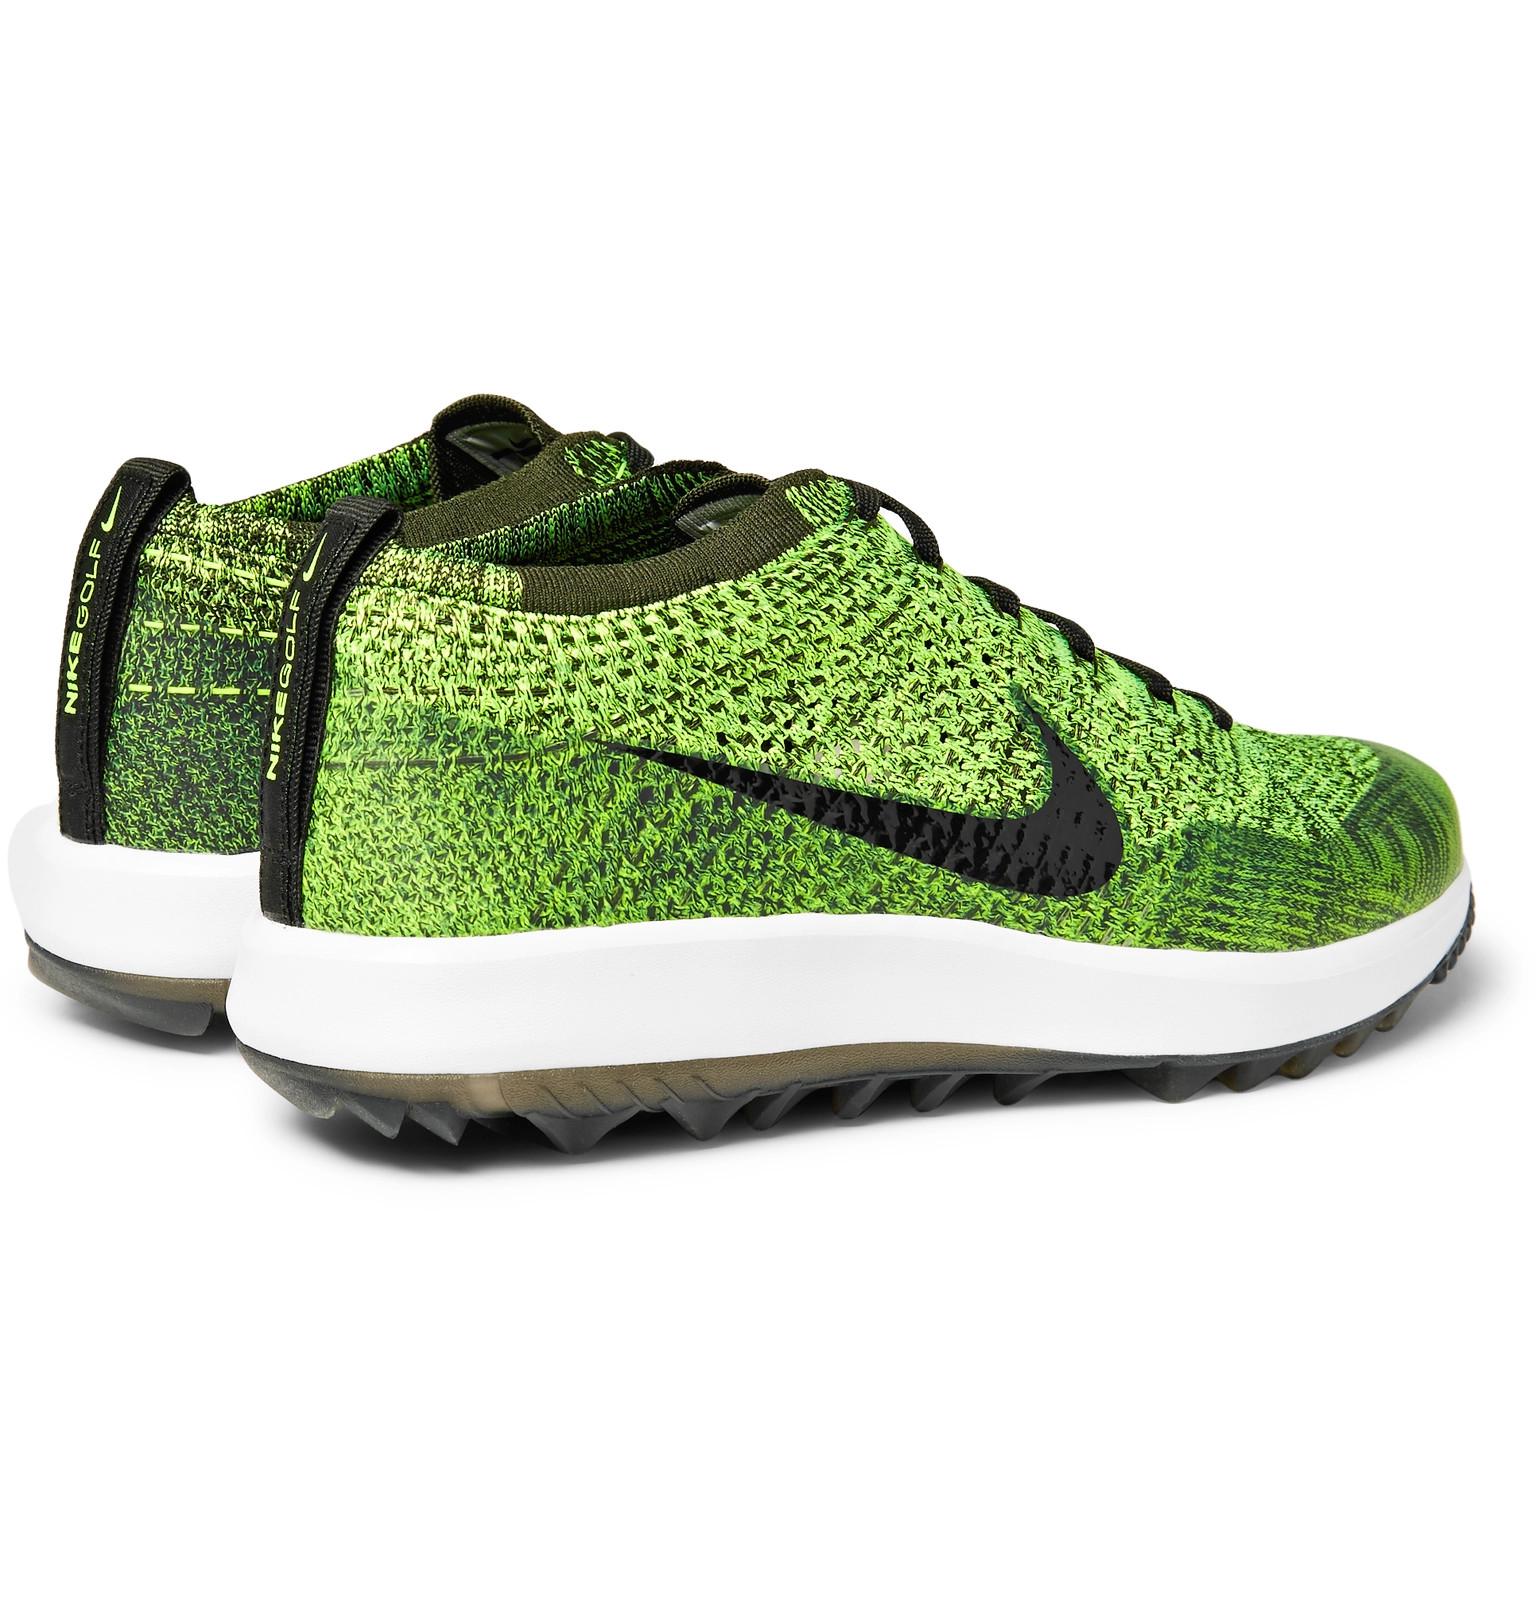 Nike Flyknit Racer Golf Shoes in Green for Men - Lyst